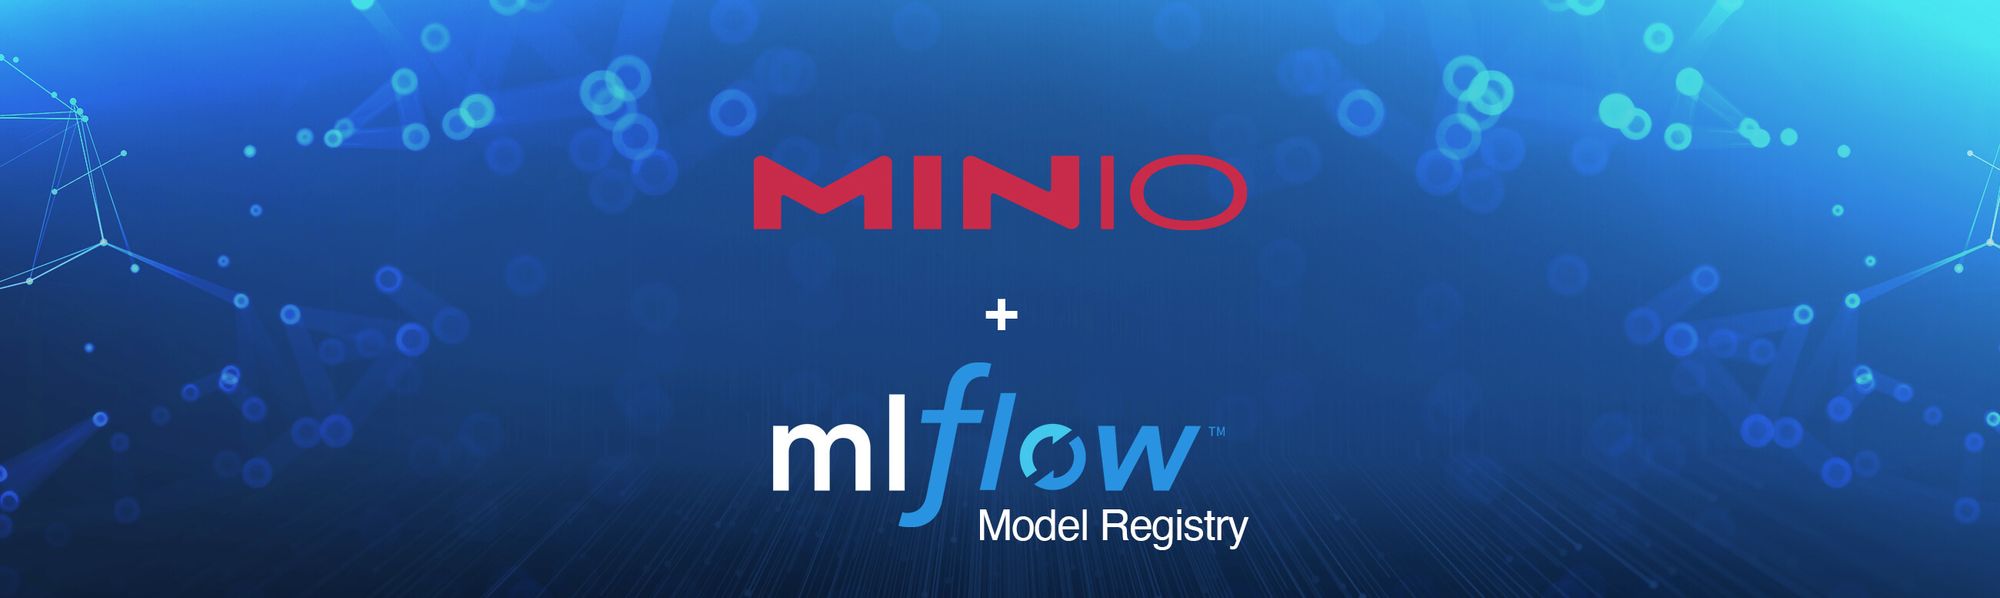 MLflow Model Registry and MinIO